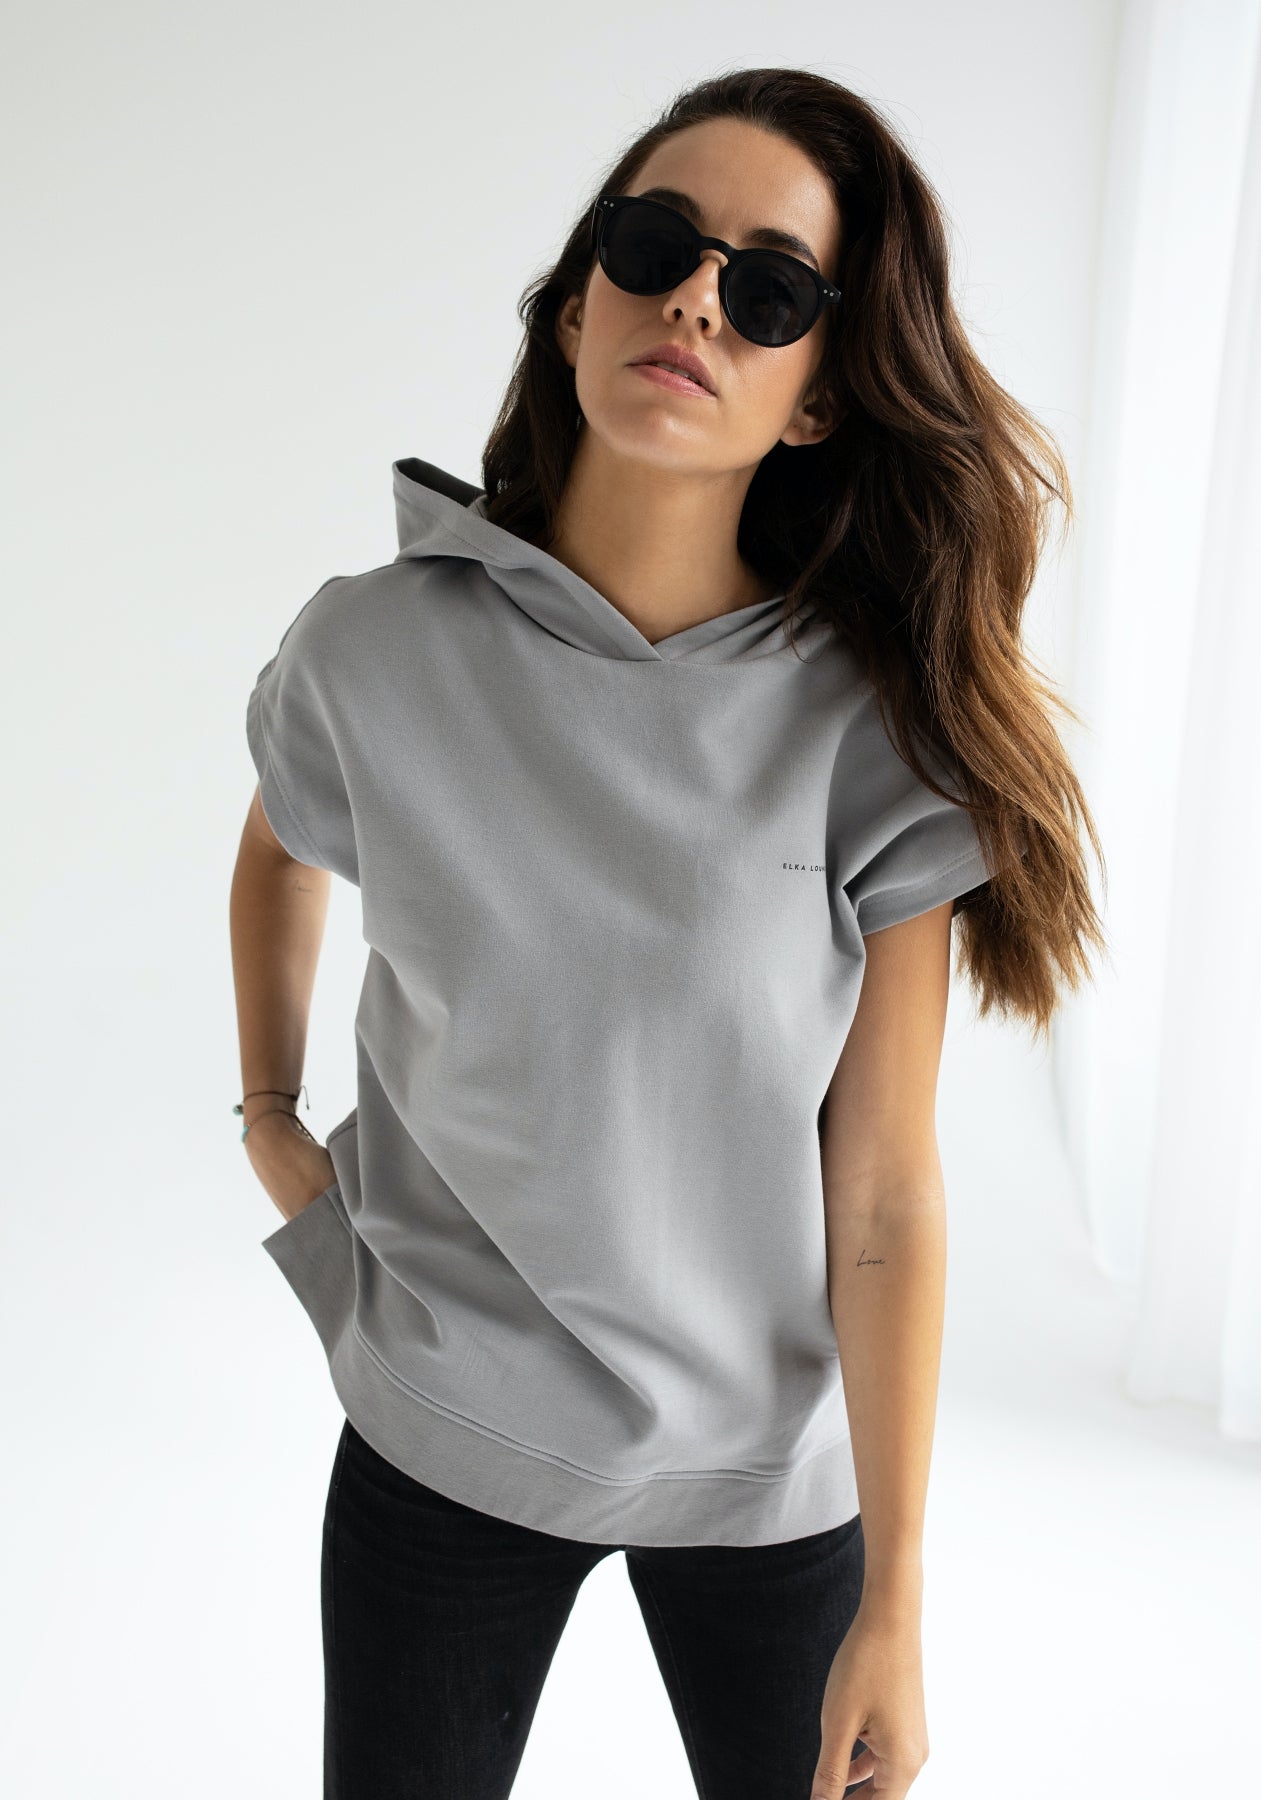 Women Sleeveless sweatshirt / vest organic cotton Light gray - Oversized